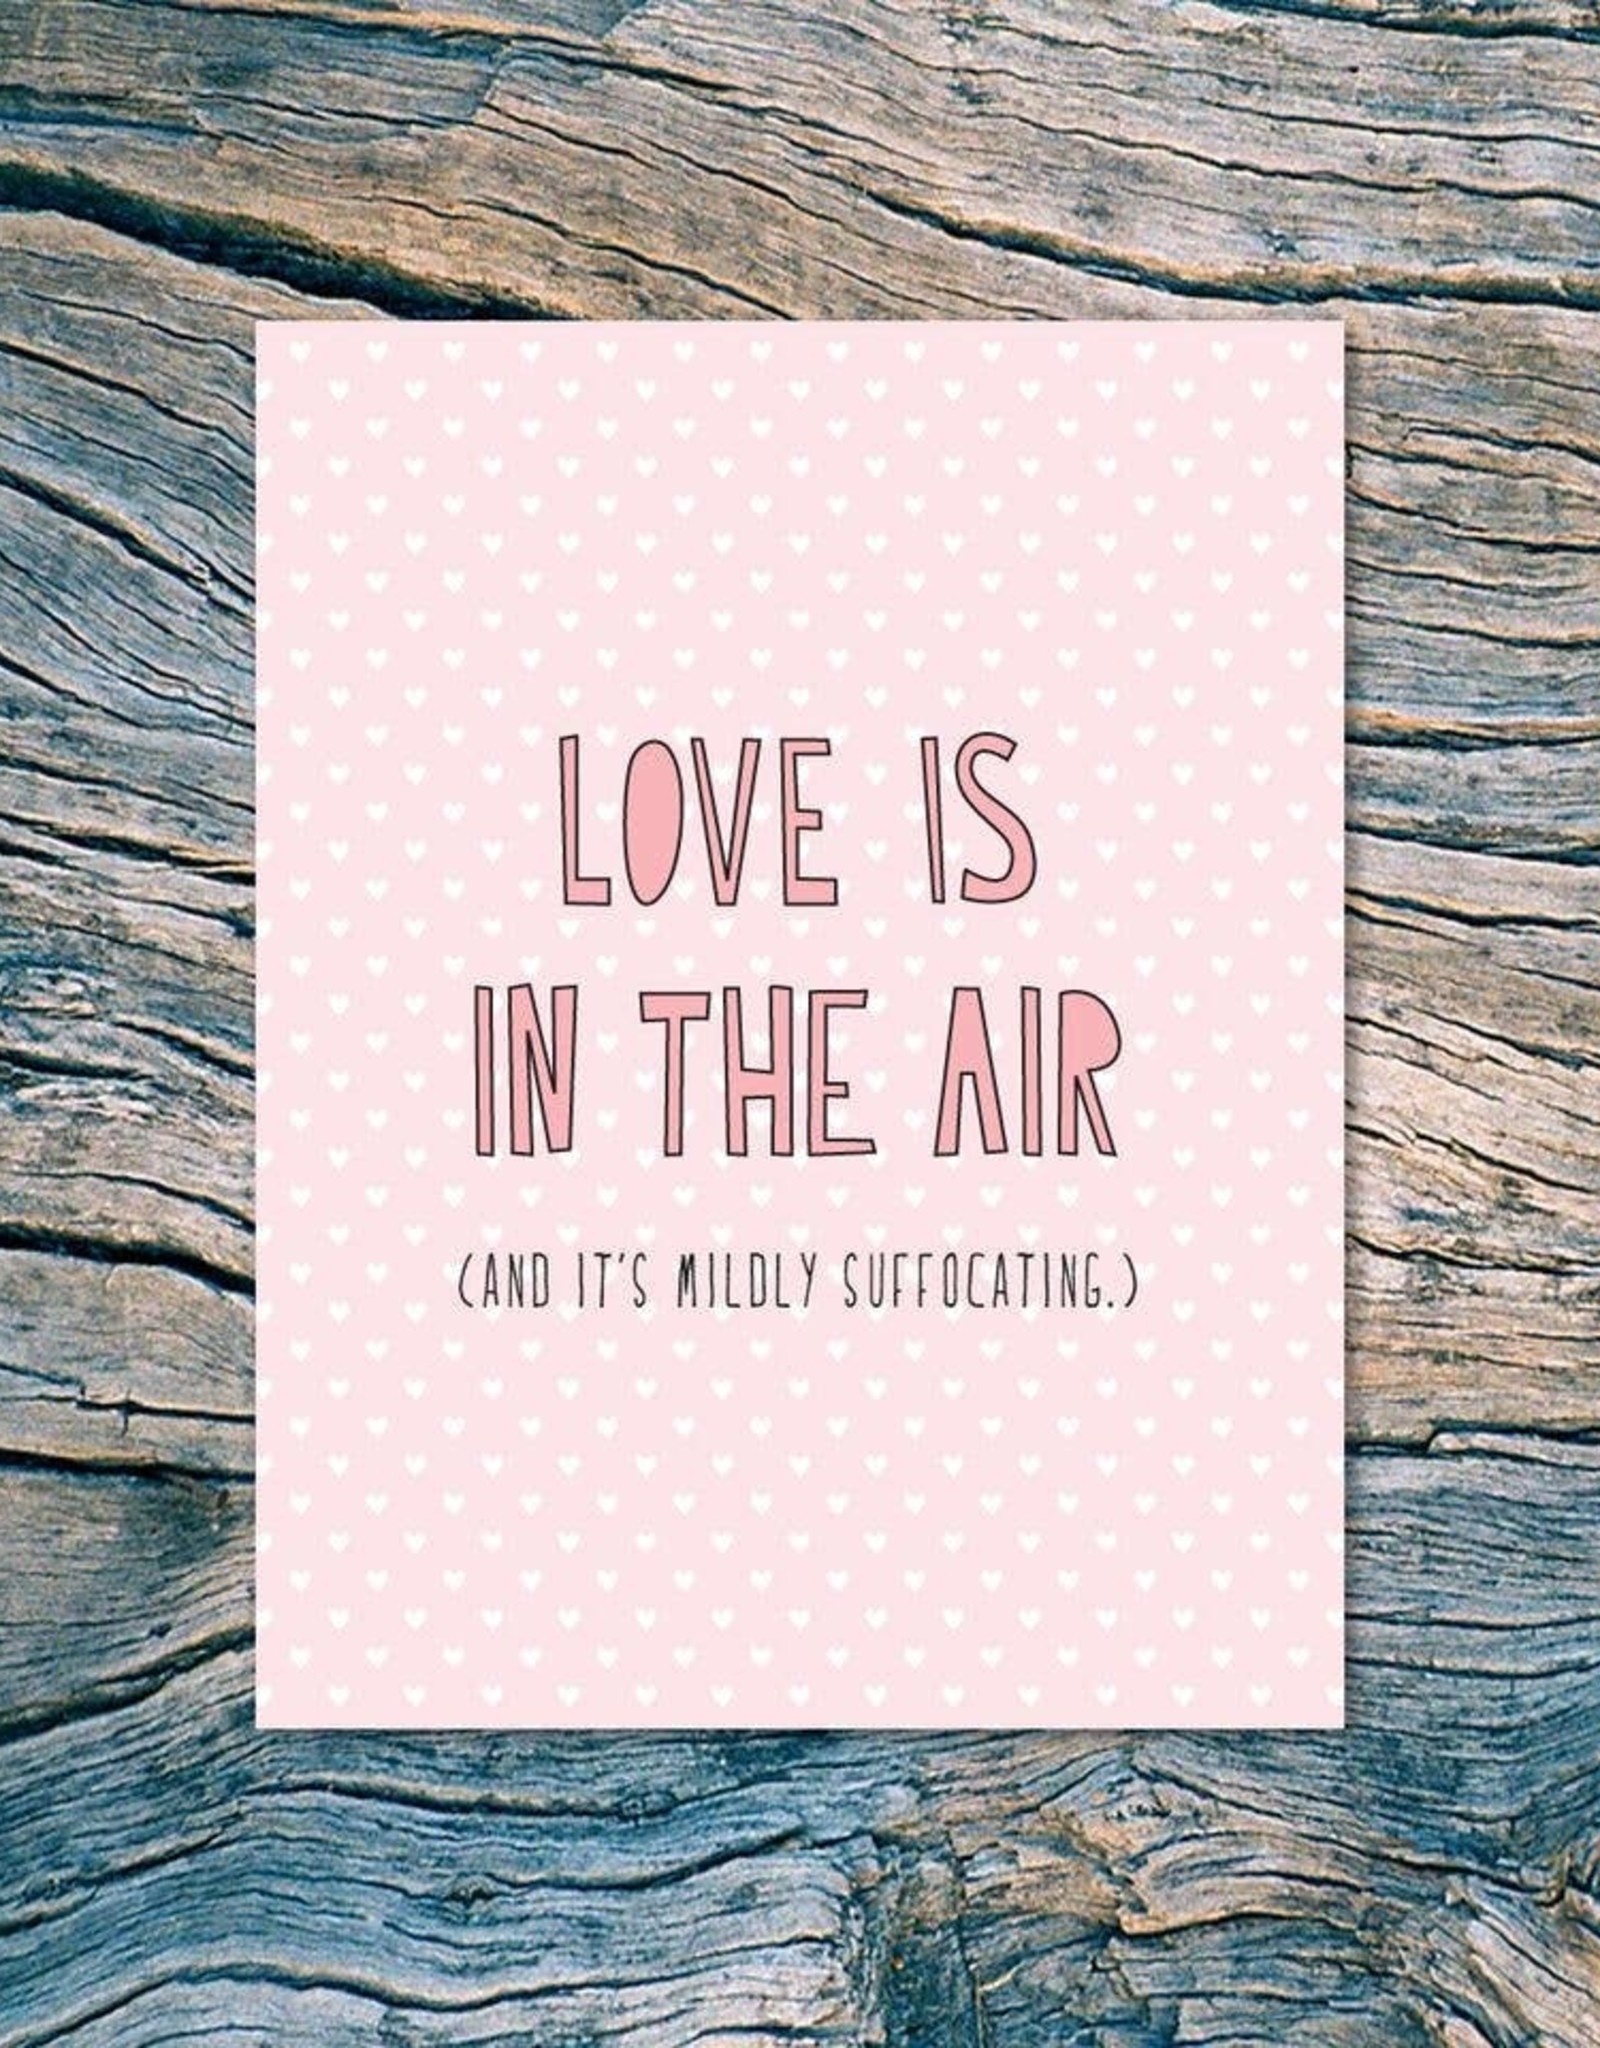 Near Modern Disaster Card - Love: Love Is In The Air